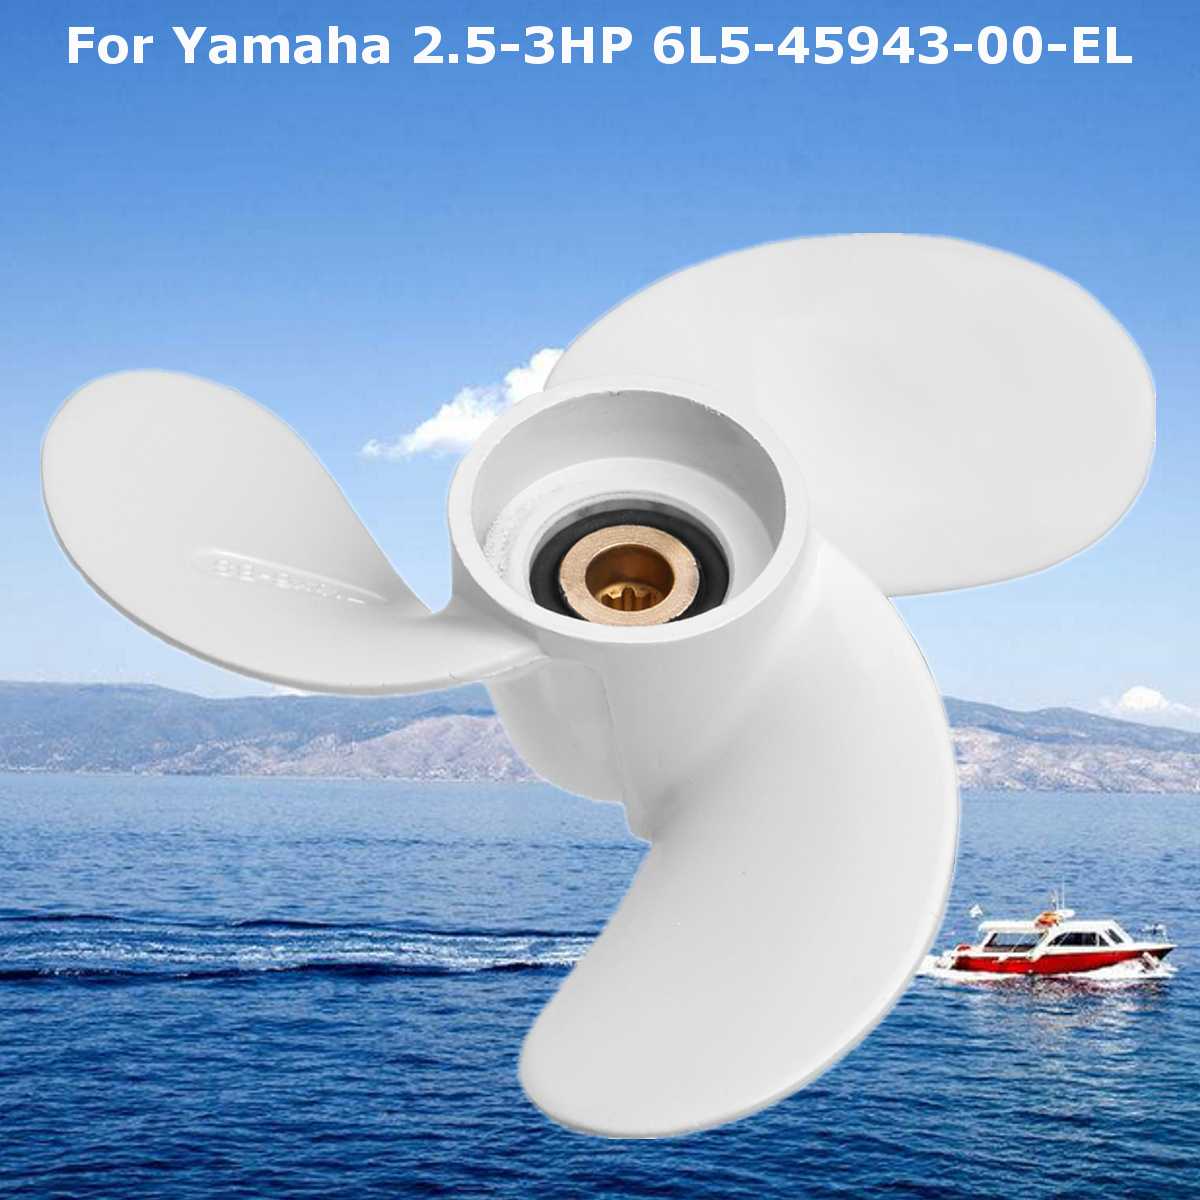 Auzan 7 1/4 x 6 Marine Outboard Propeller For Yamaha 2.5-3HP 6L5-45943-00-EL White Propeller 9 Spline Tooth Aluminium Alloy